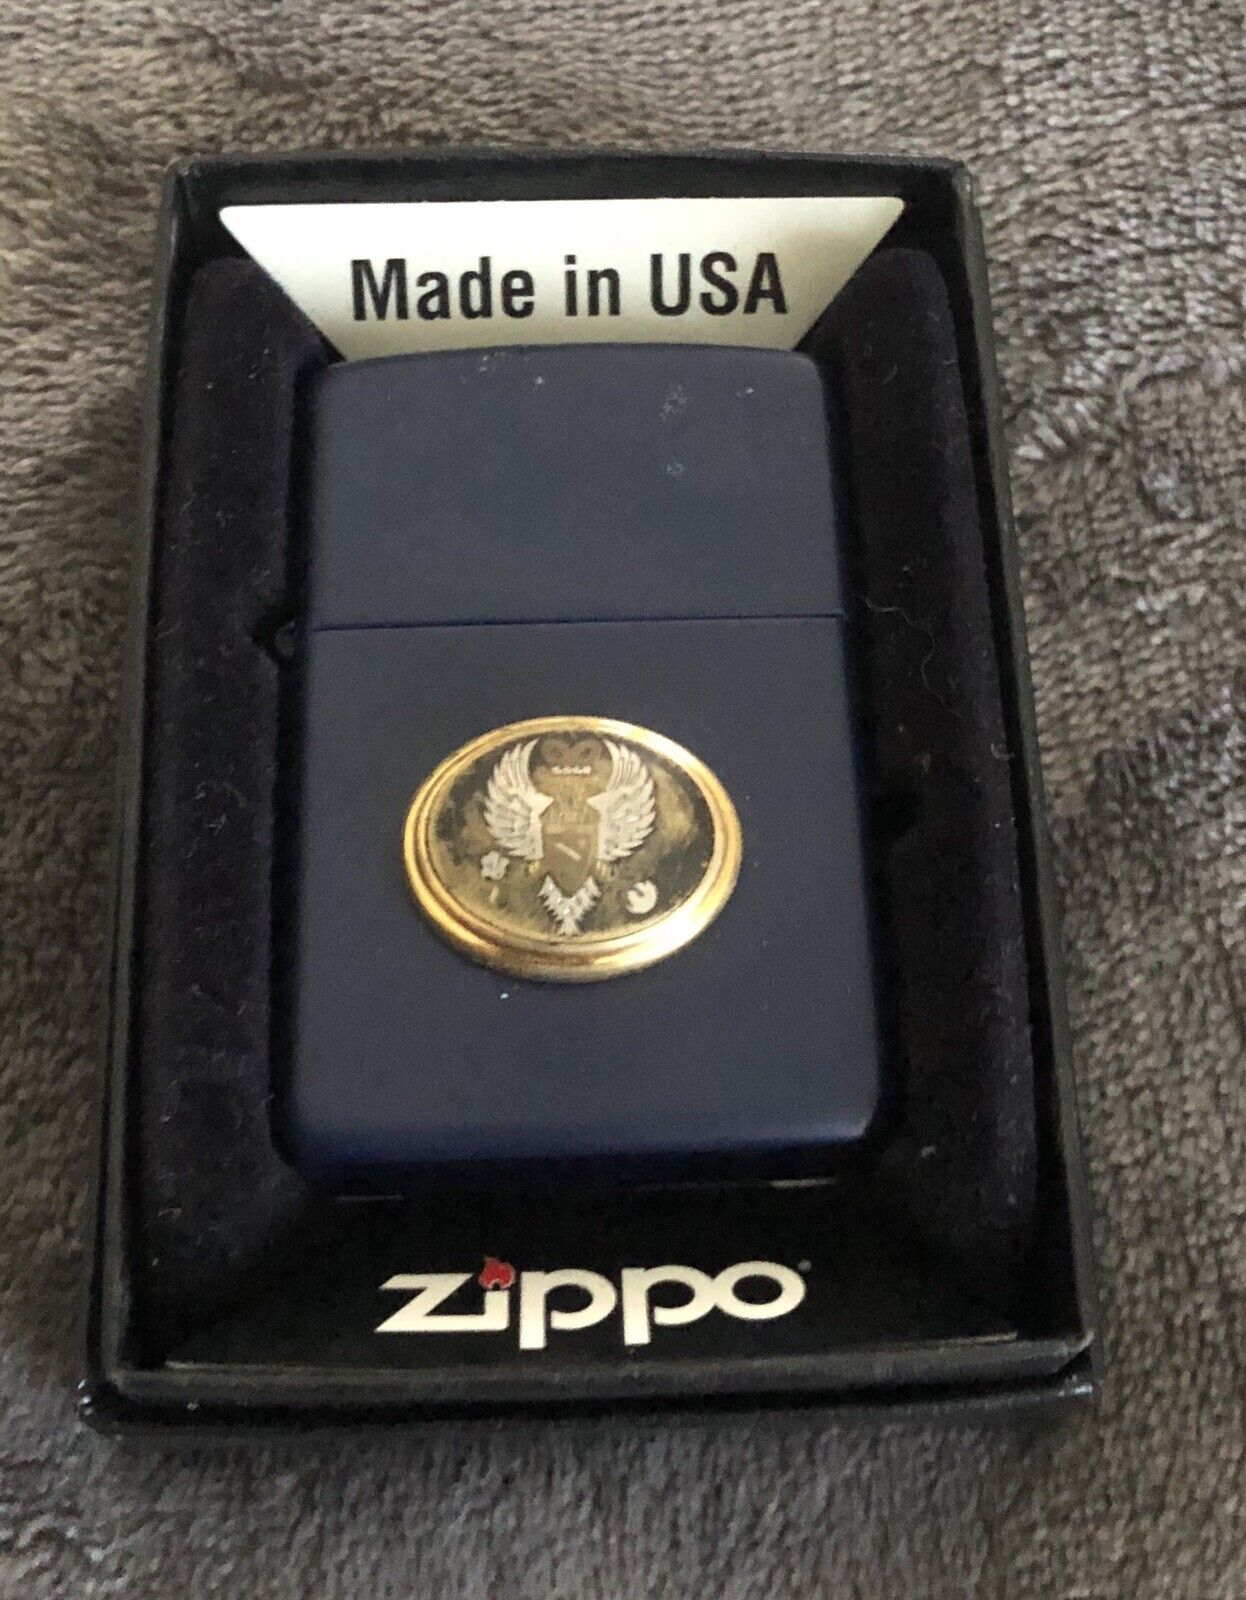 Zippo Lighter Eagle Stone Emblem Design